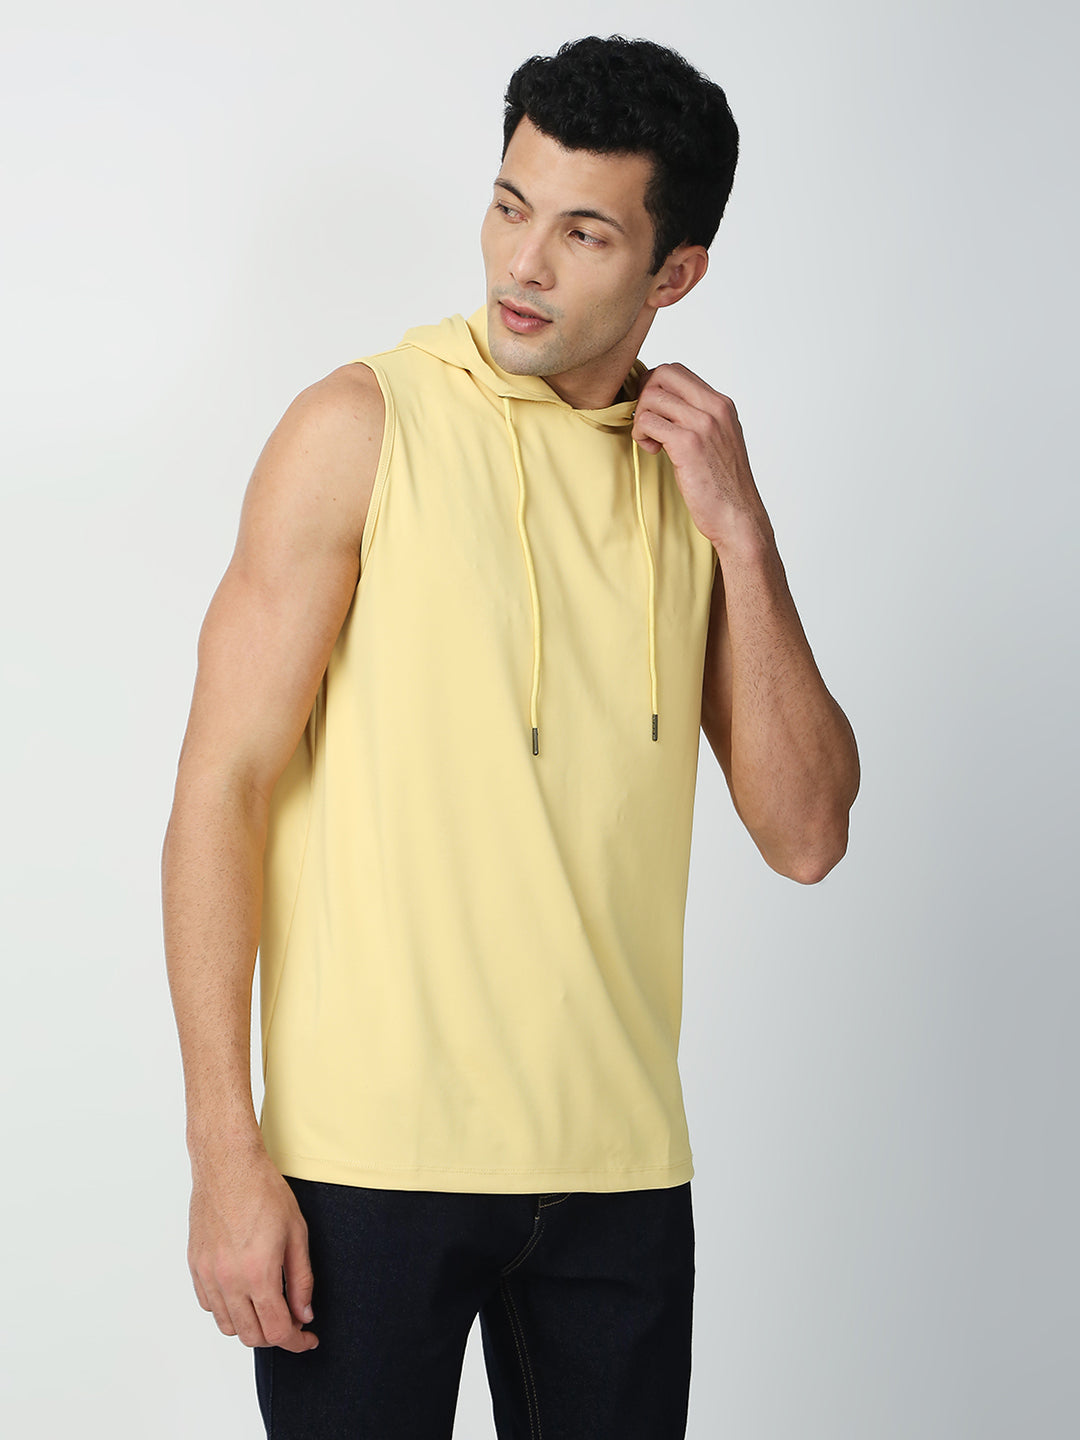 Buy Blamblack Men's Hoodie Neck Lemon Yellow Color GYM Wear Vest